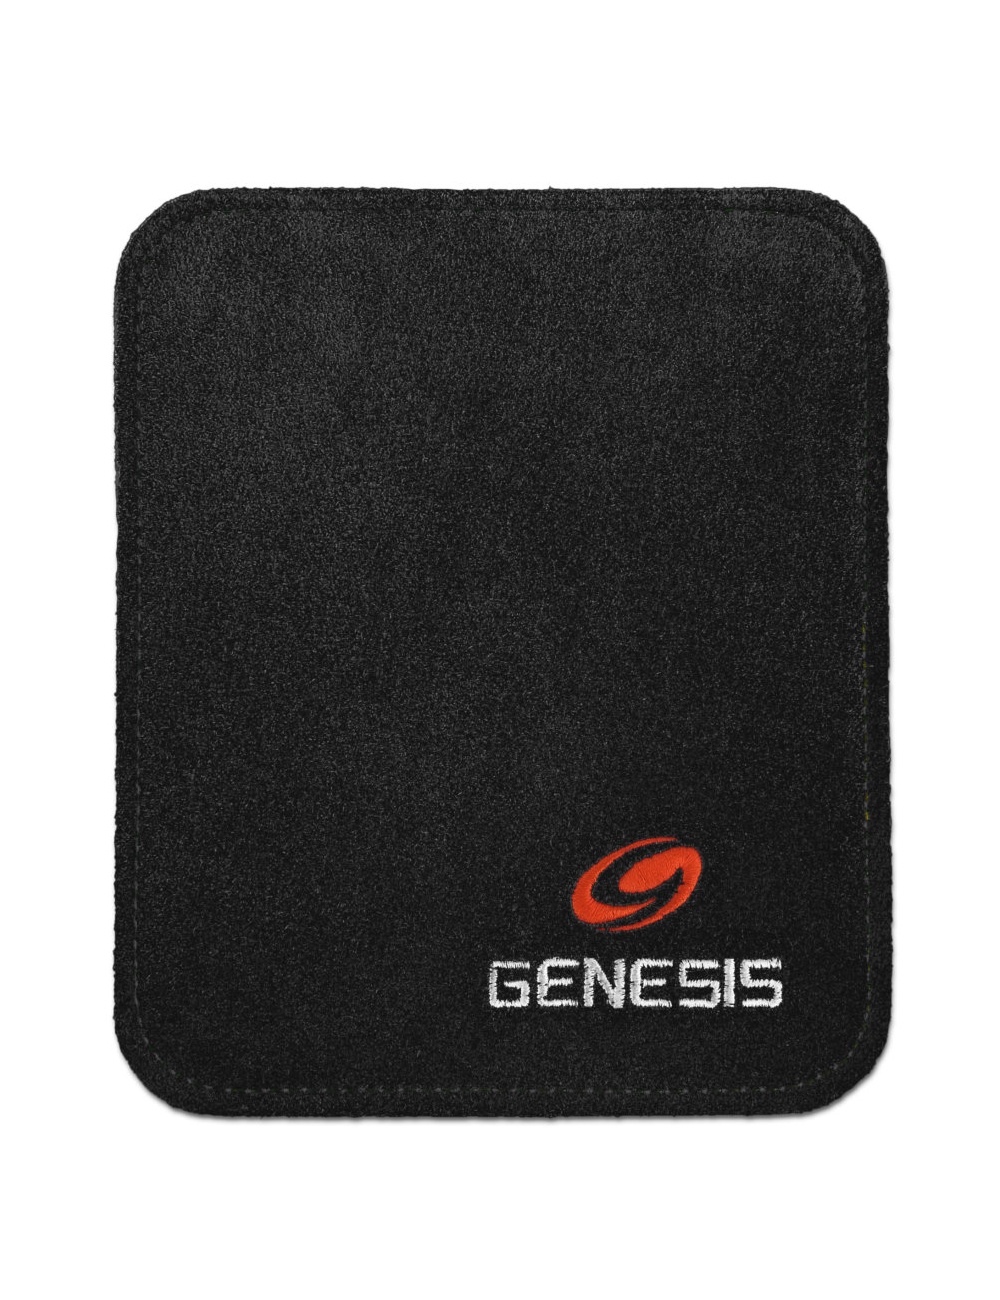 Genesis Pure Pad Bowling Ball Wipe - Black